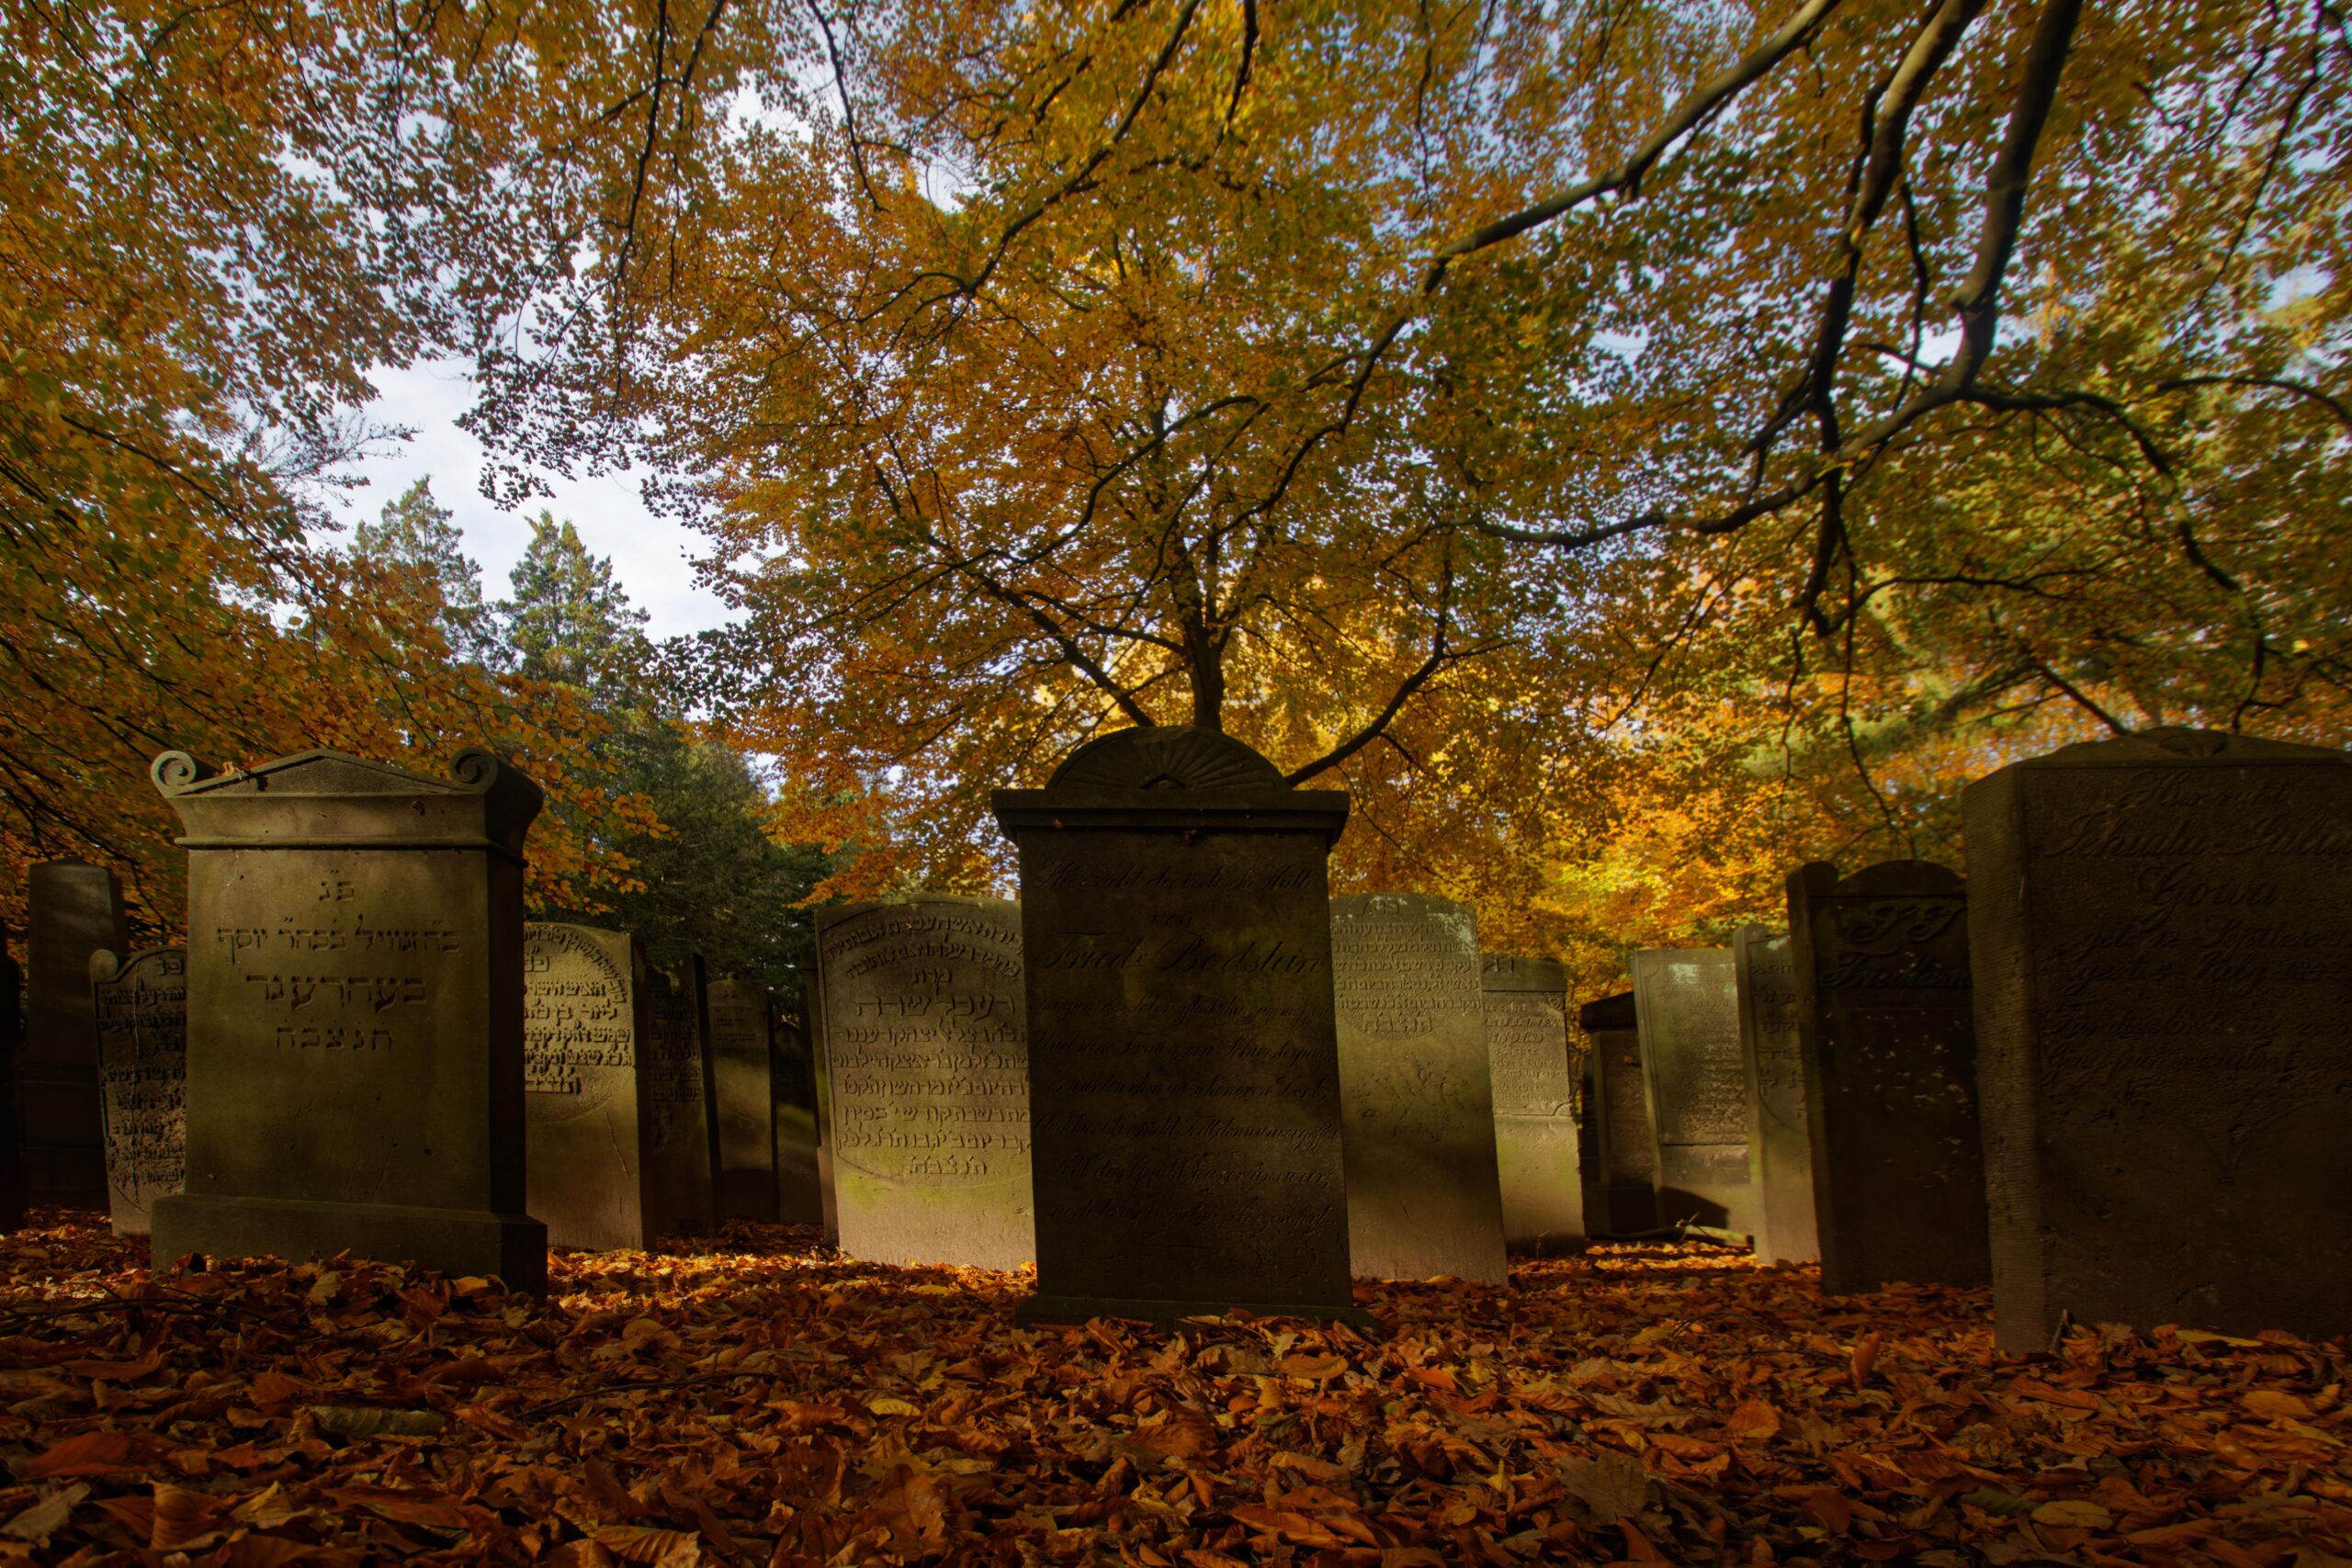 Bodo Jarren - Jüdischer Friedhof Ohlsdorf 31.10.2021 - Herbstlicher Blick